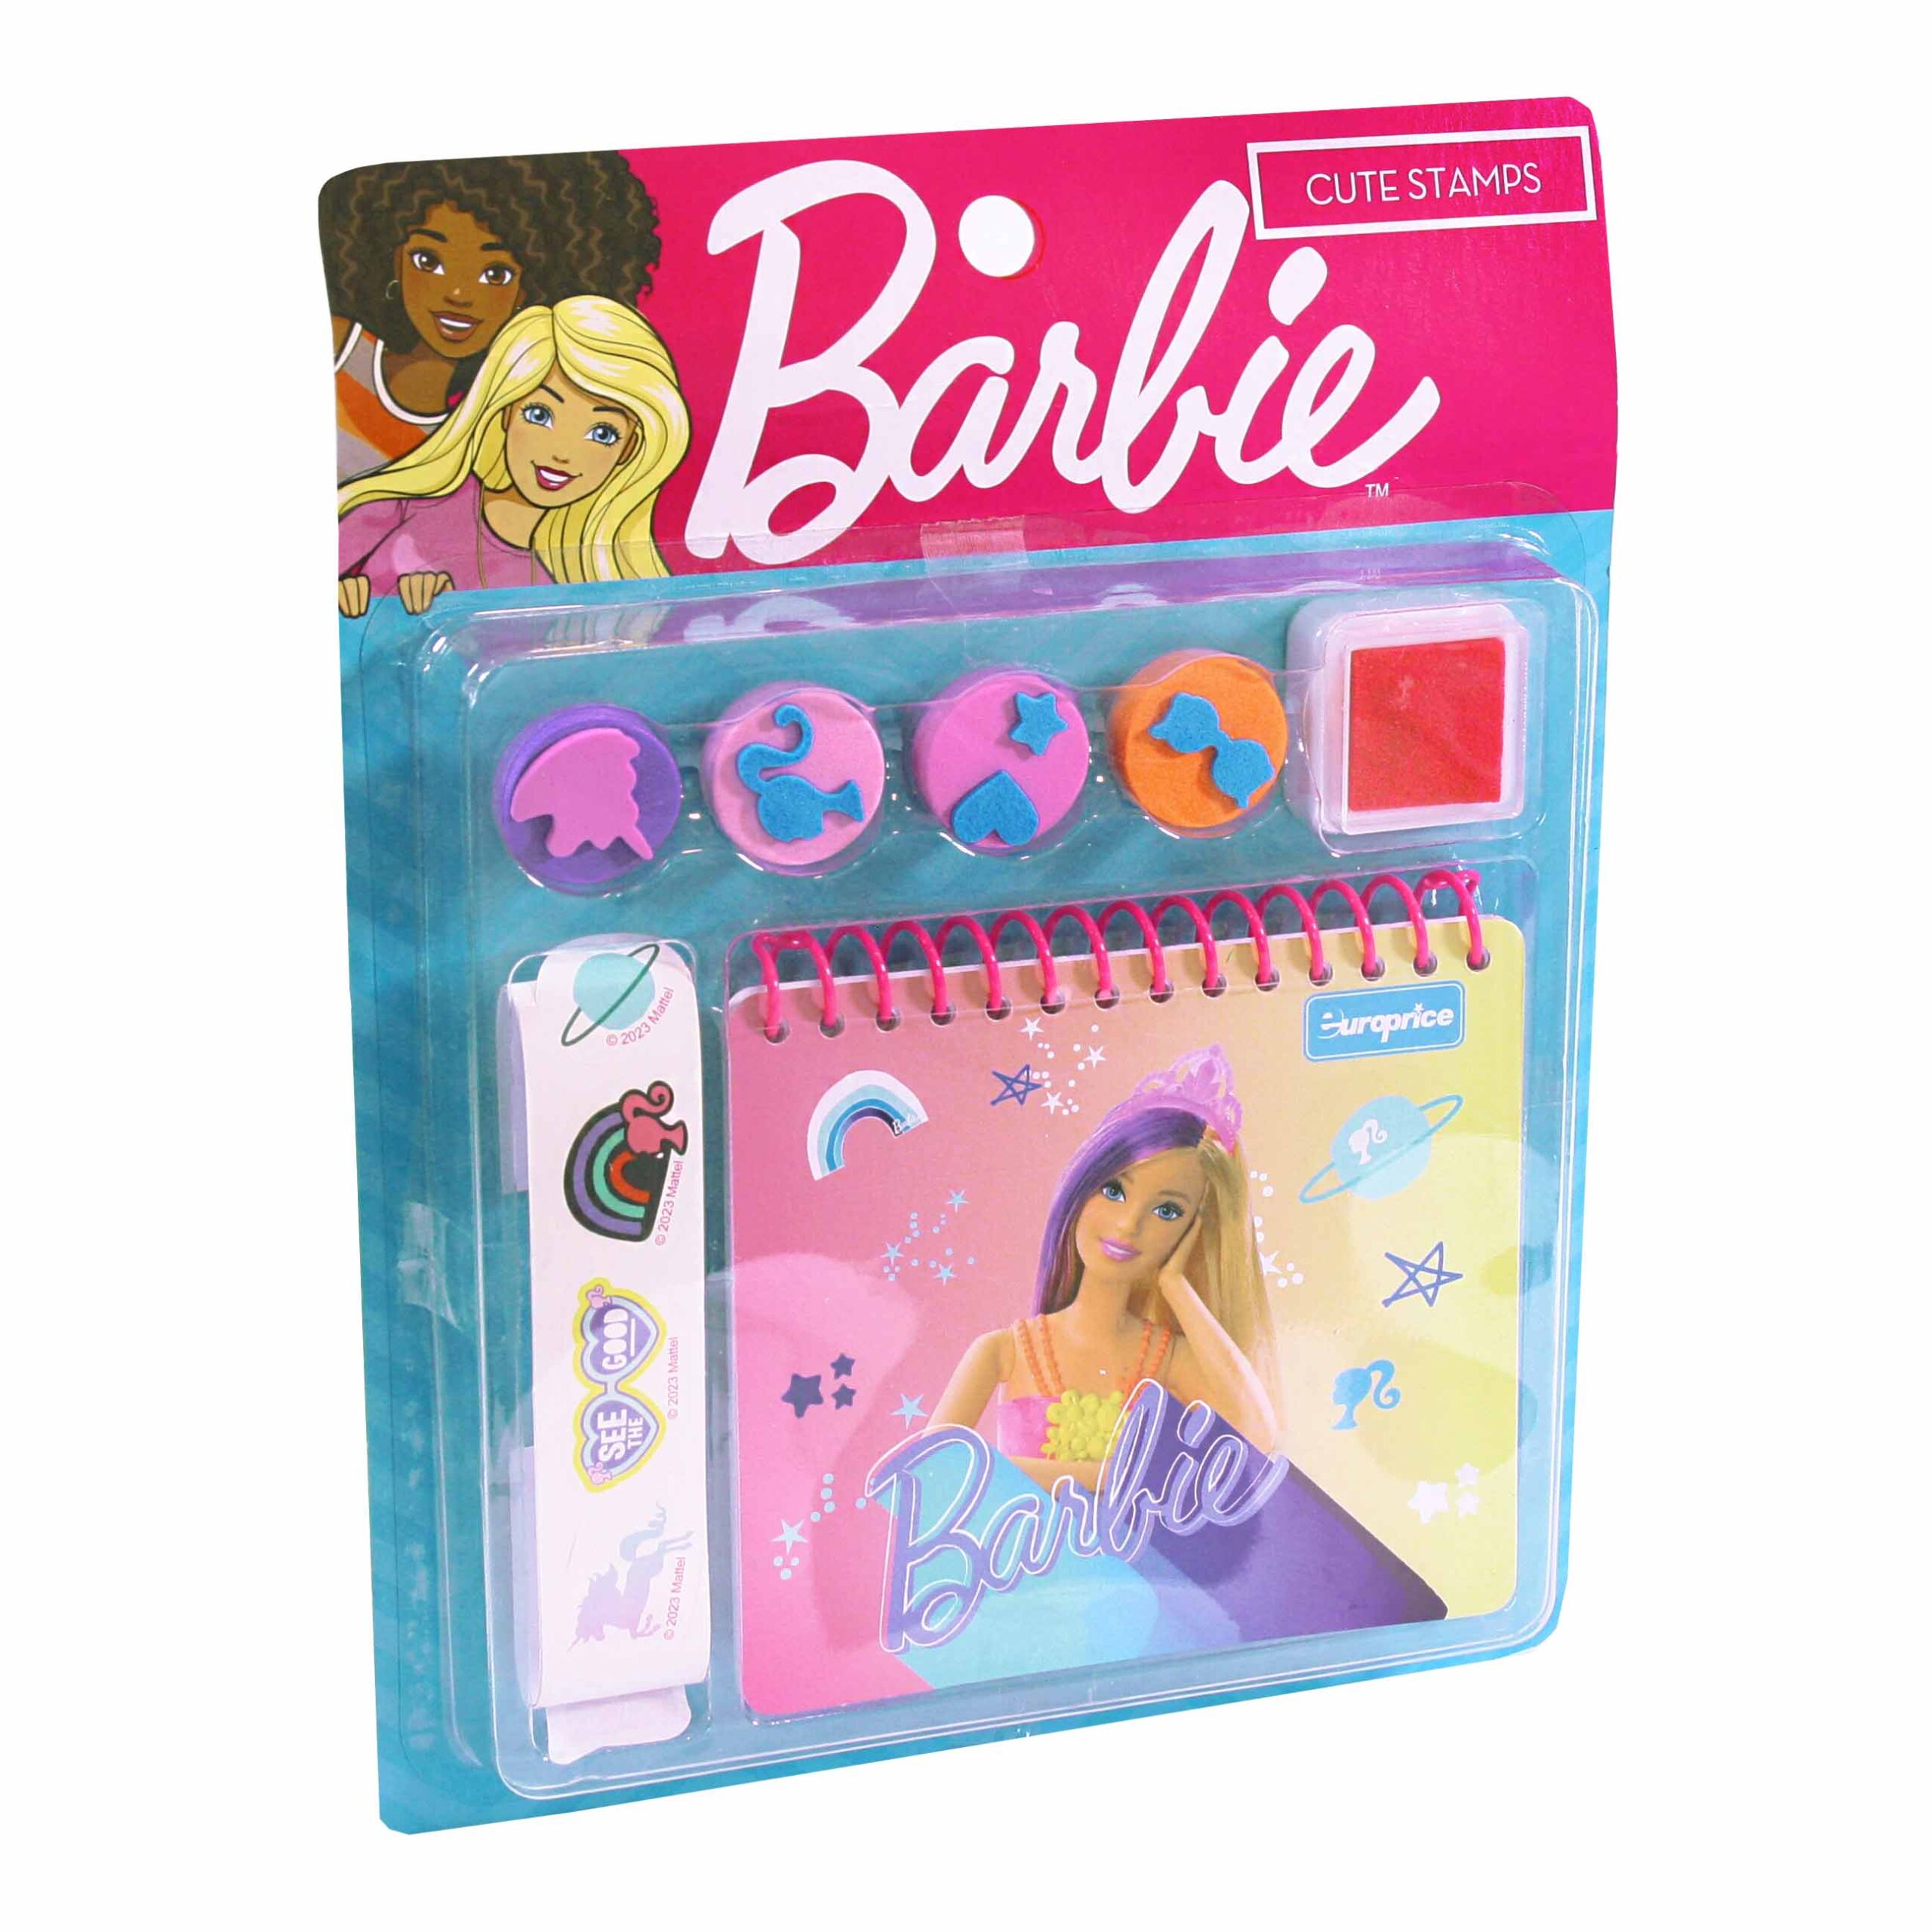 Barbie: Cute Stamps